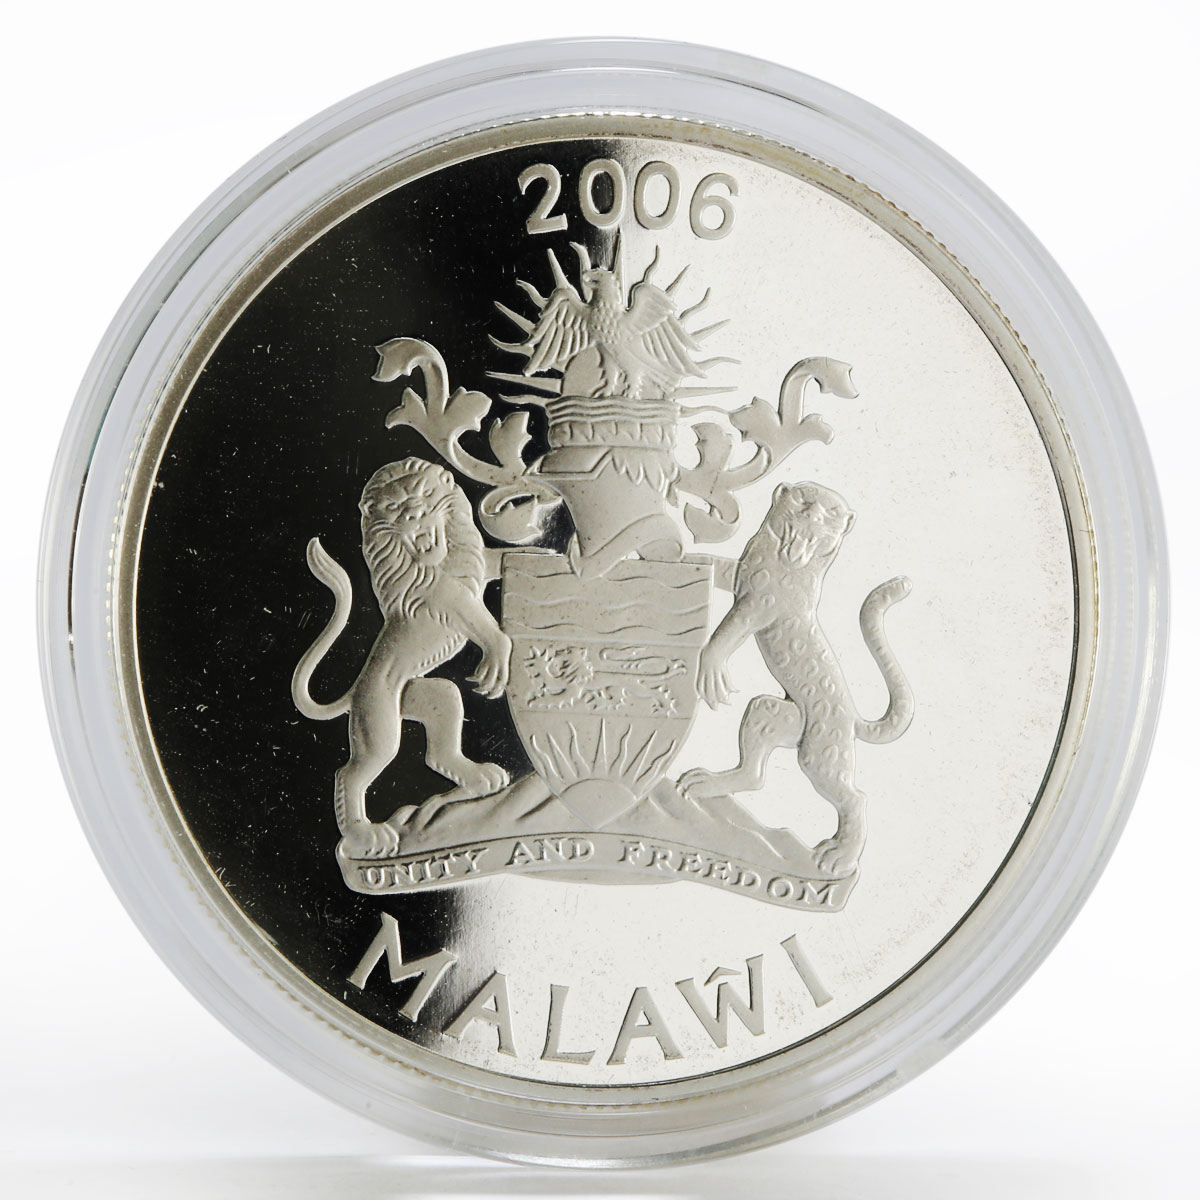 Malawi 5 kwacha Journey to Africa series Kilimanjaro Bird proof silver coin 2006